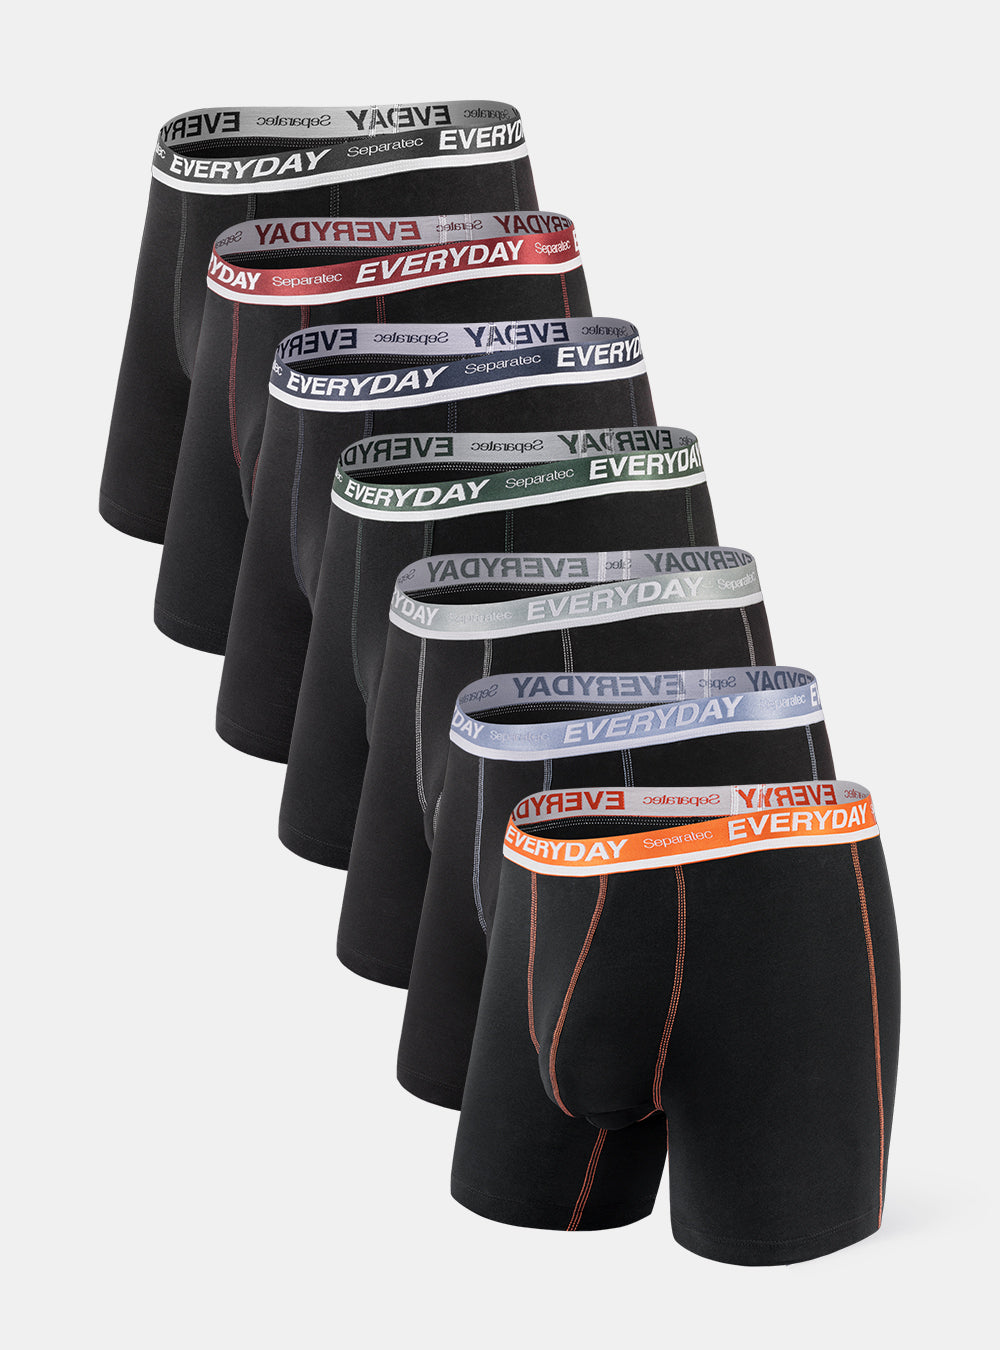 Buy Separatec Men's Underwear Dual Pouch Ultra Soft Micro Modal Comfort Fit Boxer  Briefs 3 Pack online